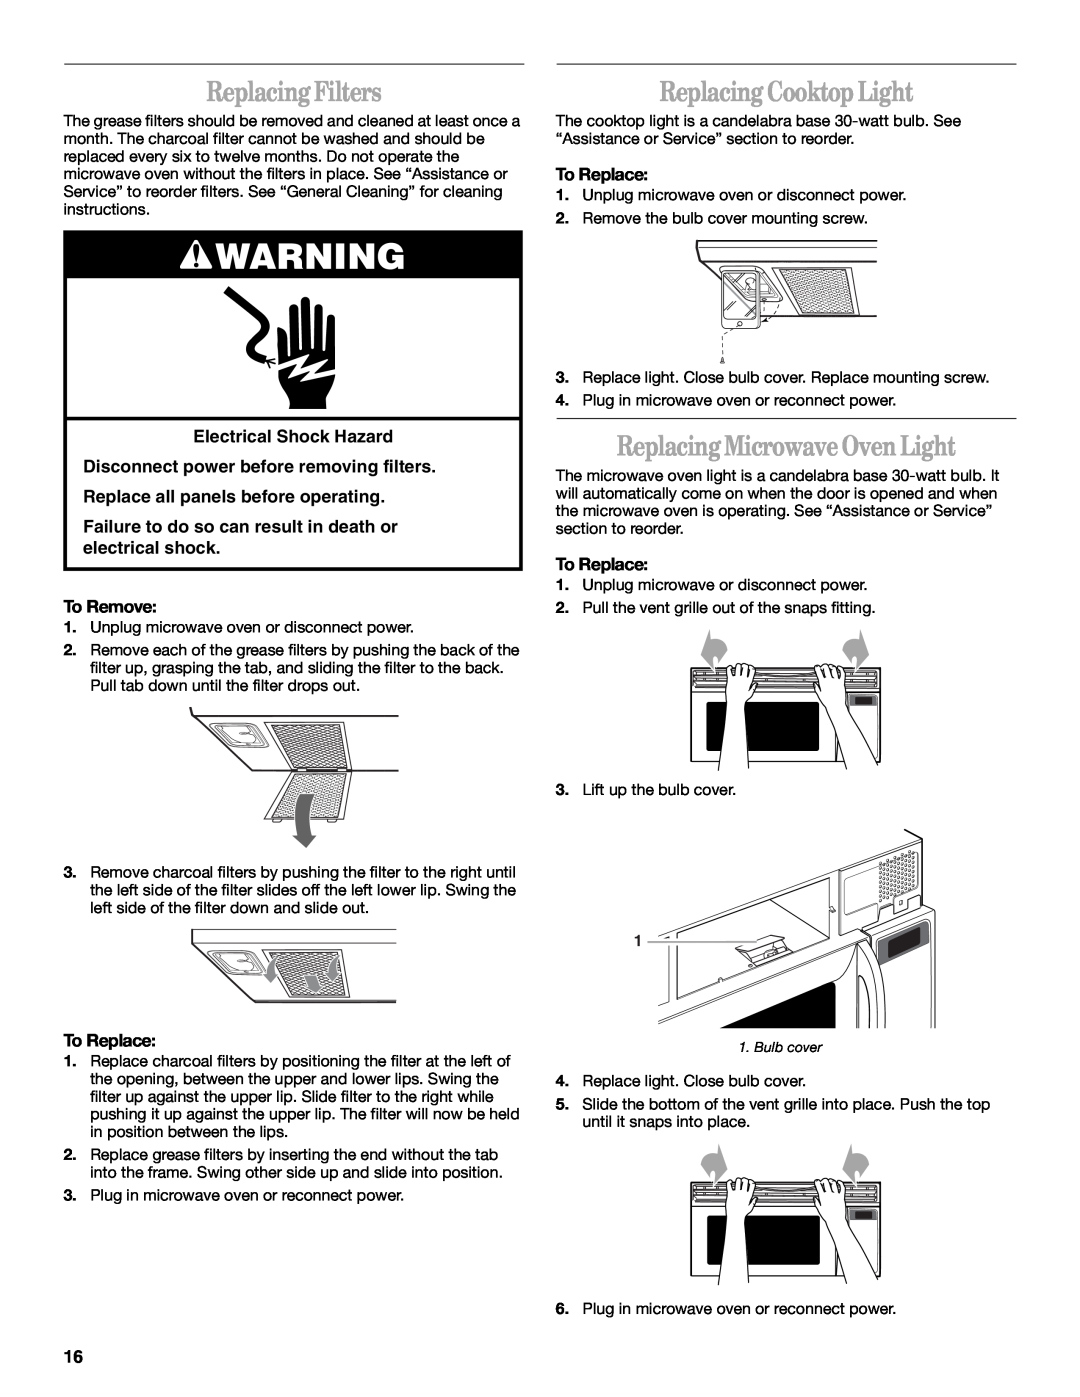 Whirlpool MH9180XL manual Replacing Filters, Replacing Cooktop Light, Replacing Microwave Oven Light 